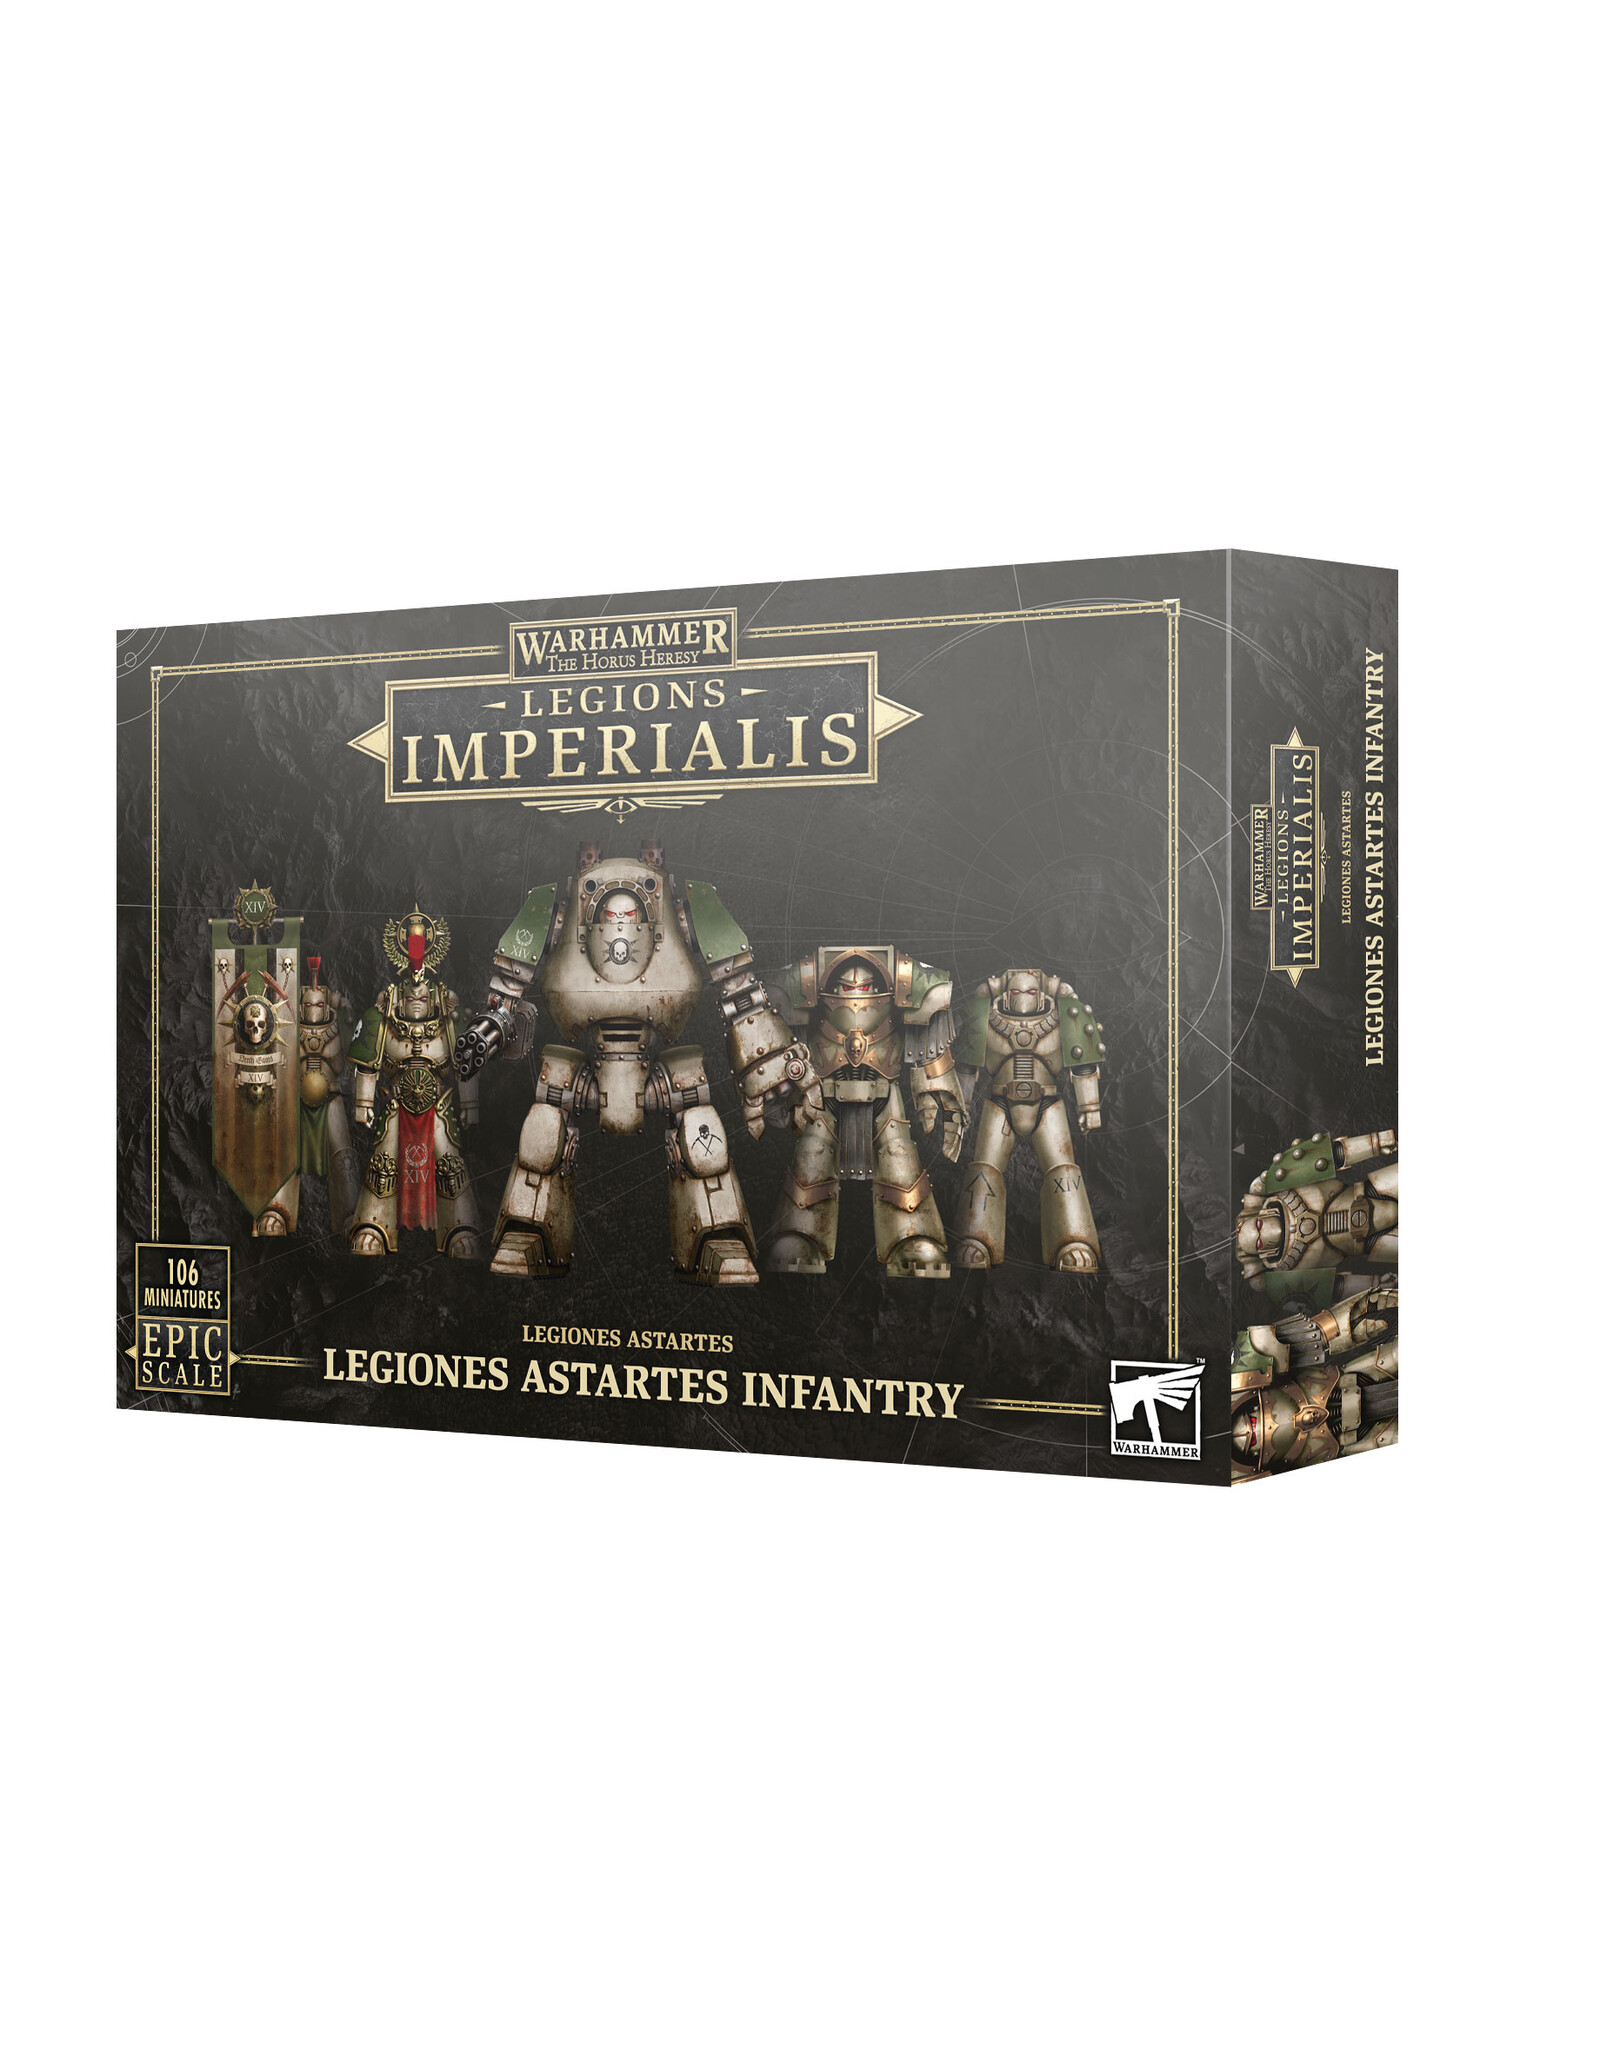 Legion Imperialis Legions Imperialis: Legiones Astartes Infantry